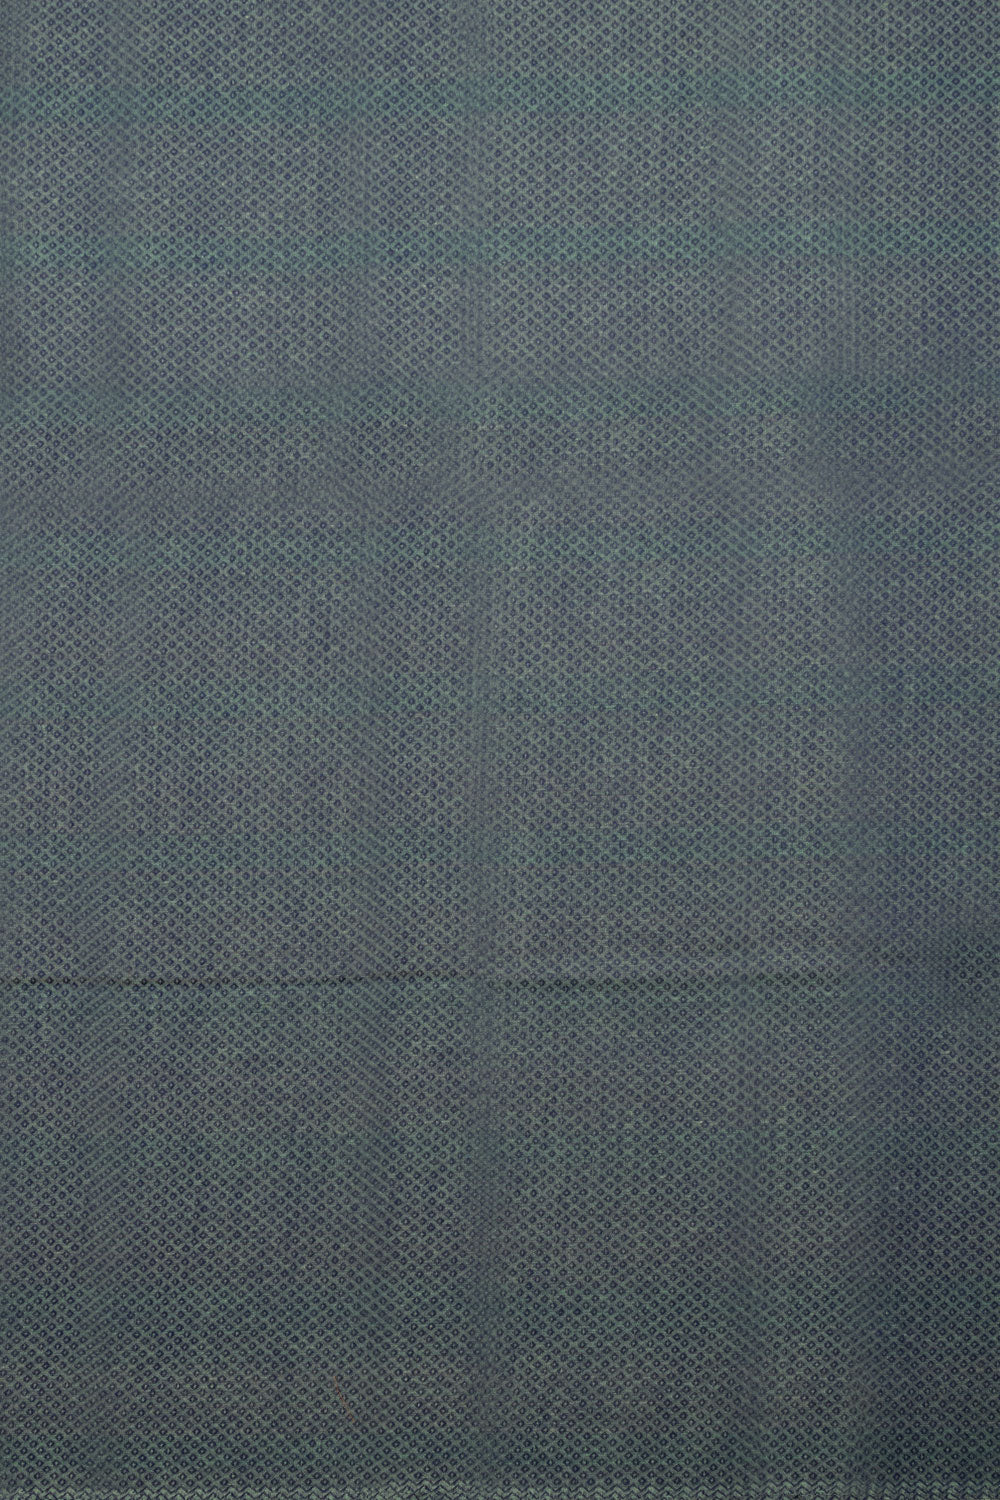 Dual Tone Pink Handloom Chettinad Cotton Saree 10070051  - Avishya